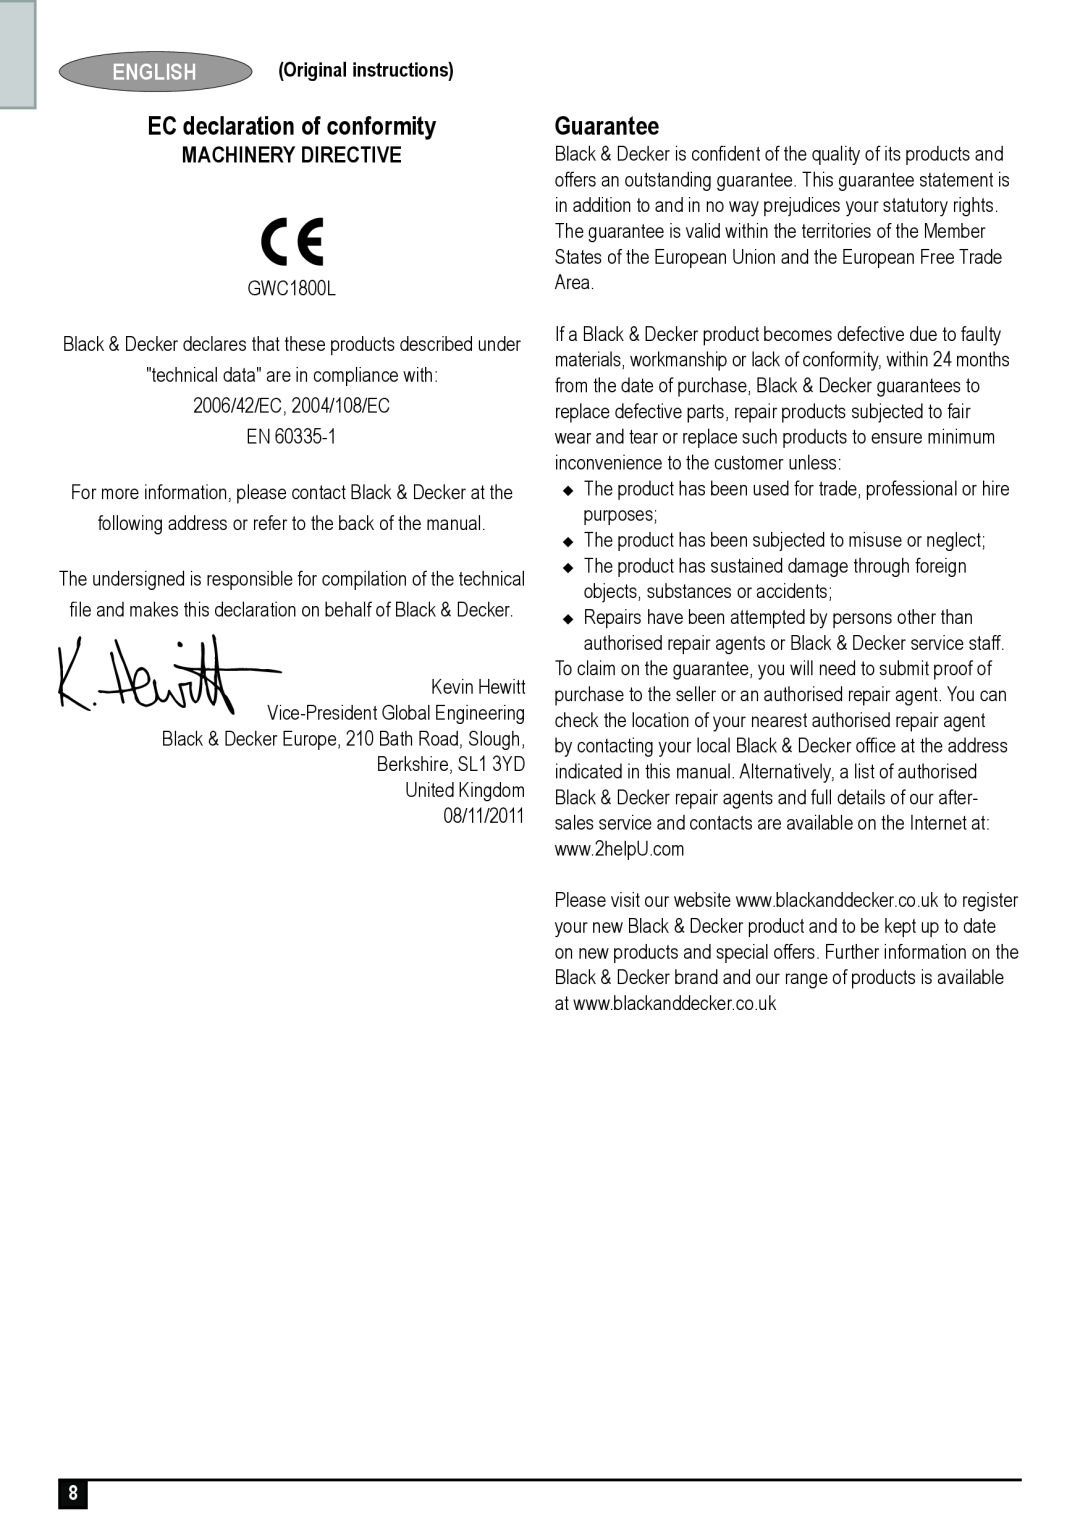 Black & Decker GWC1800L manual EC declaration of conformity, Guarantee, Machinery Directive, English 